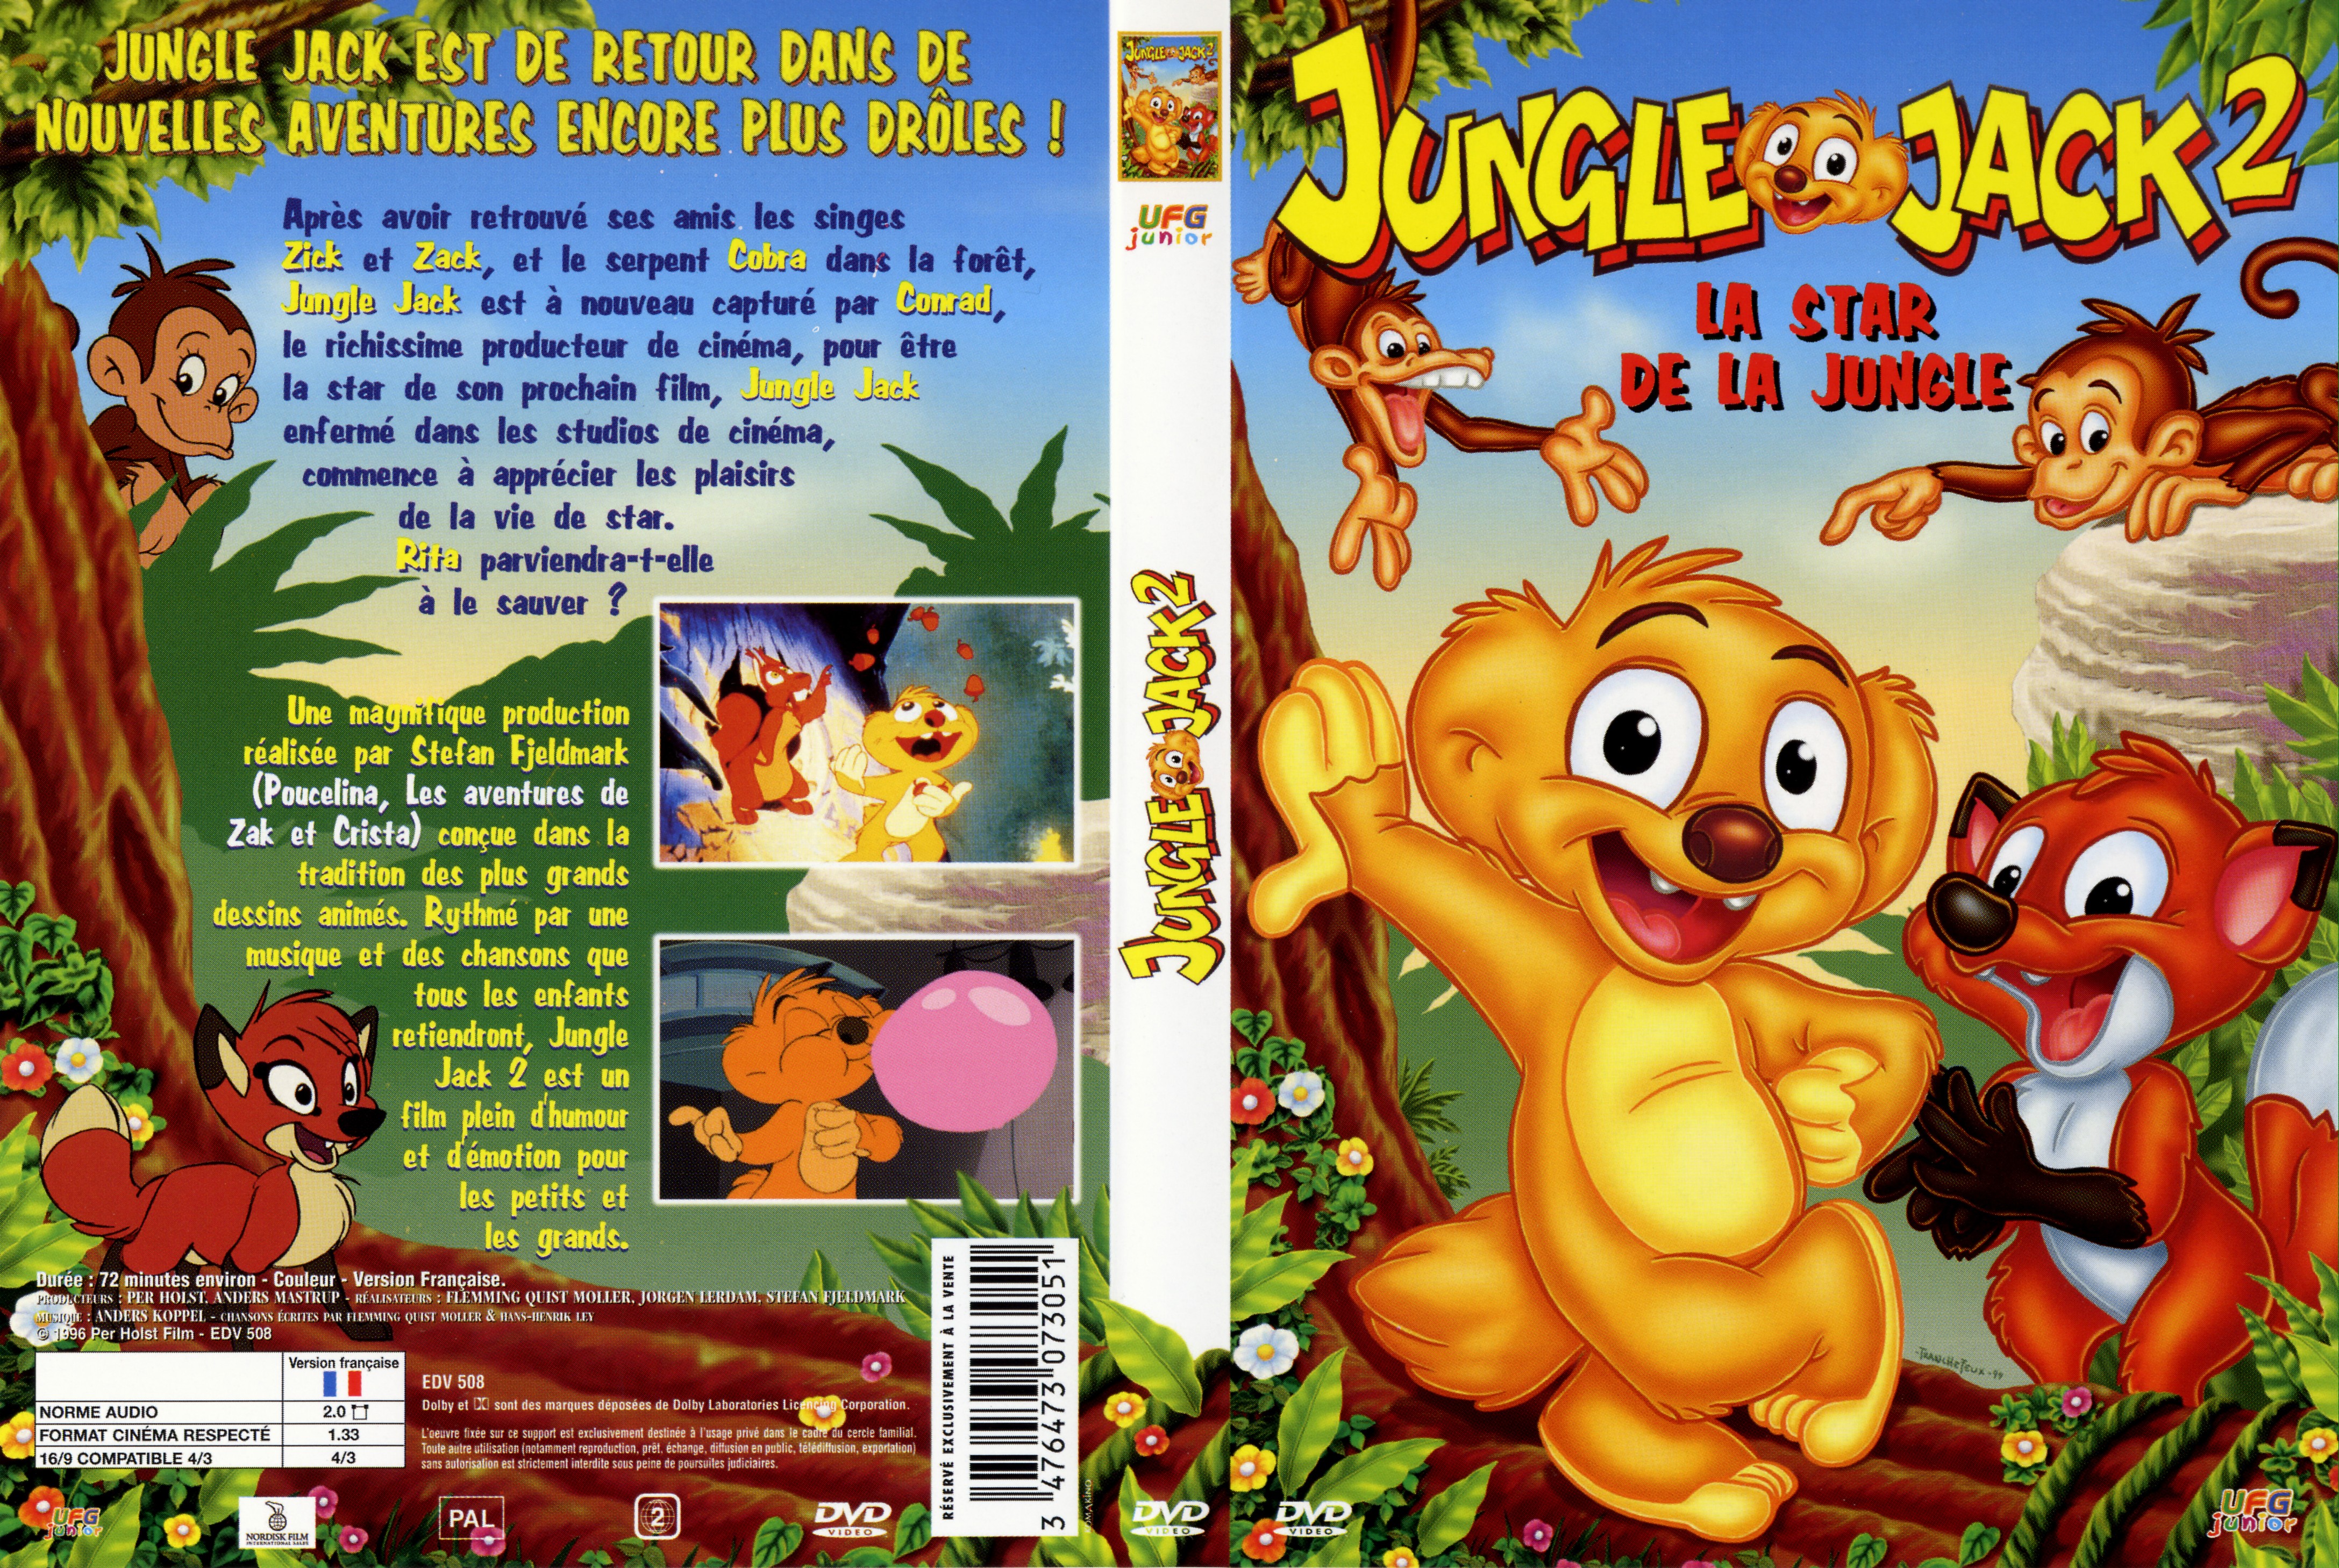 Jaquette DVD Jungle jack 2